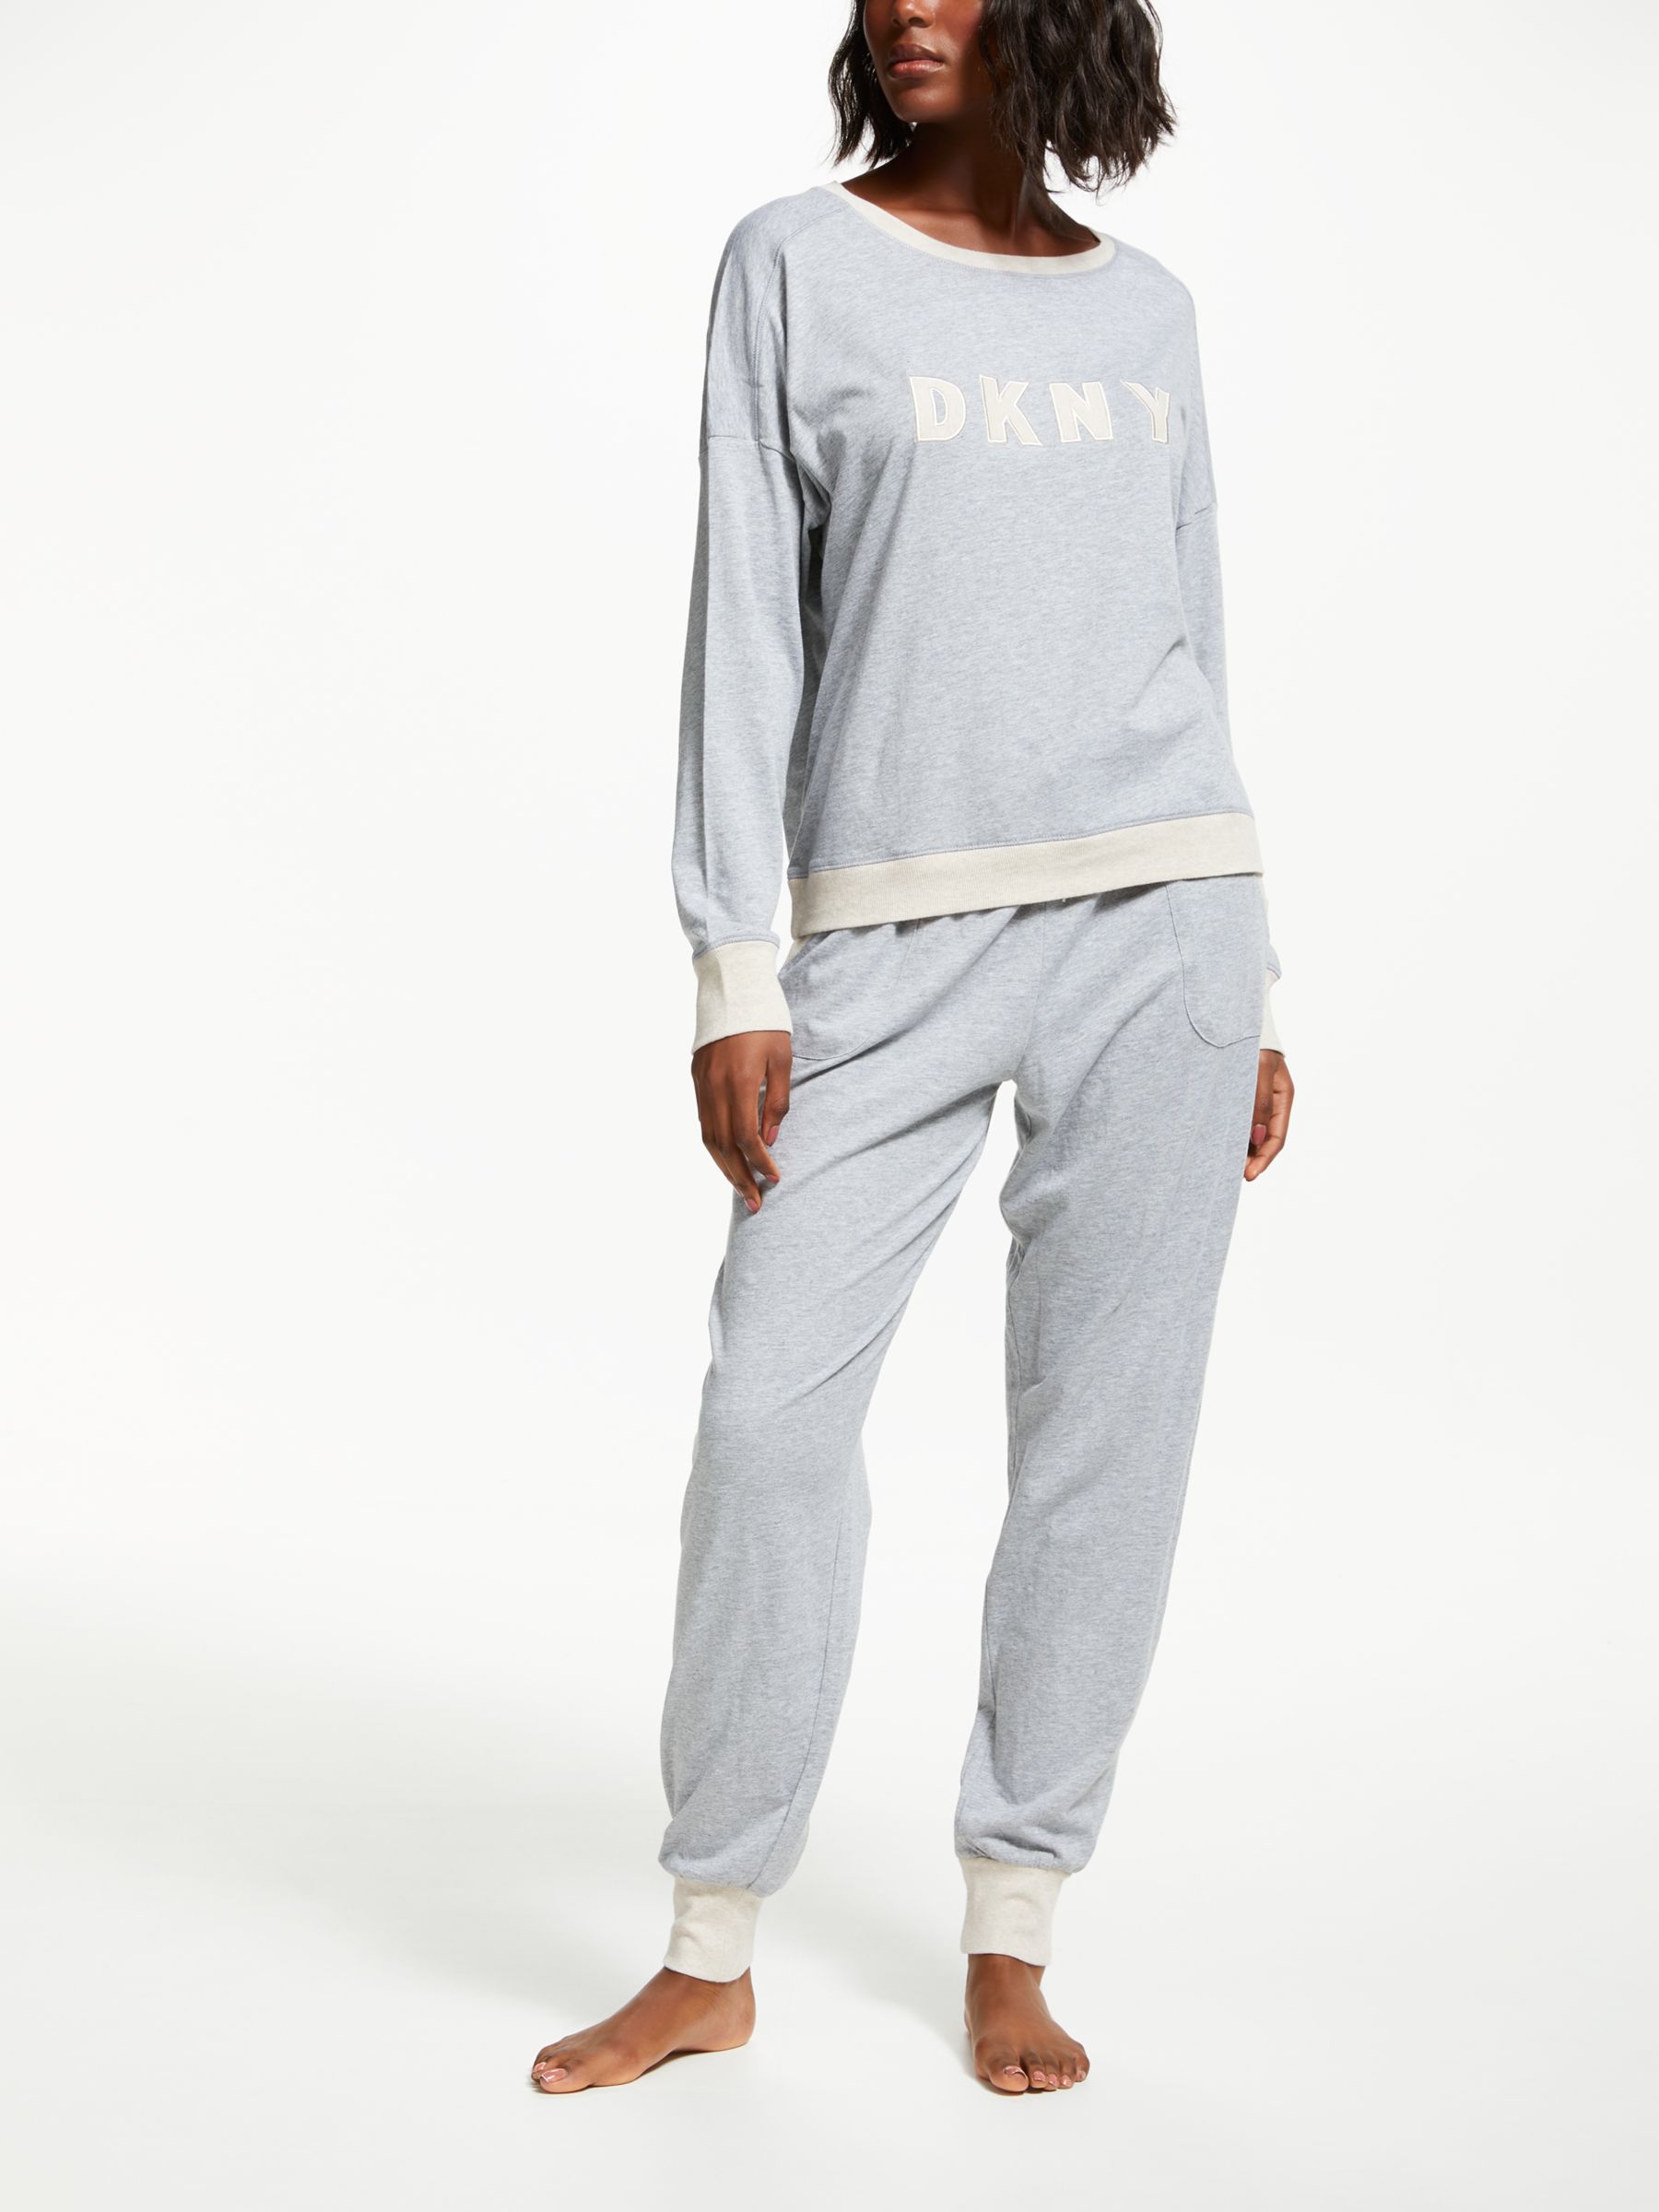 DKNY Signature Classic Pyjama Set, Grey